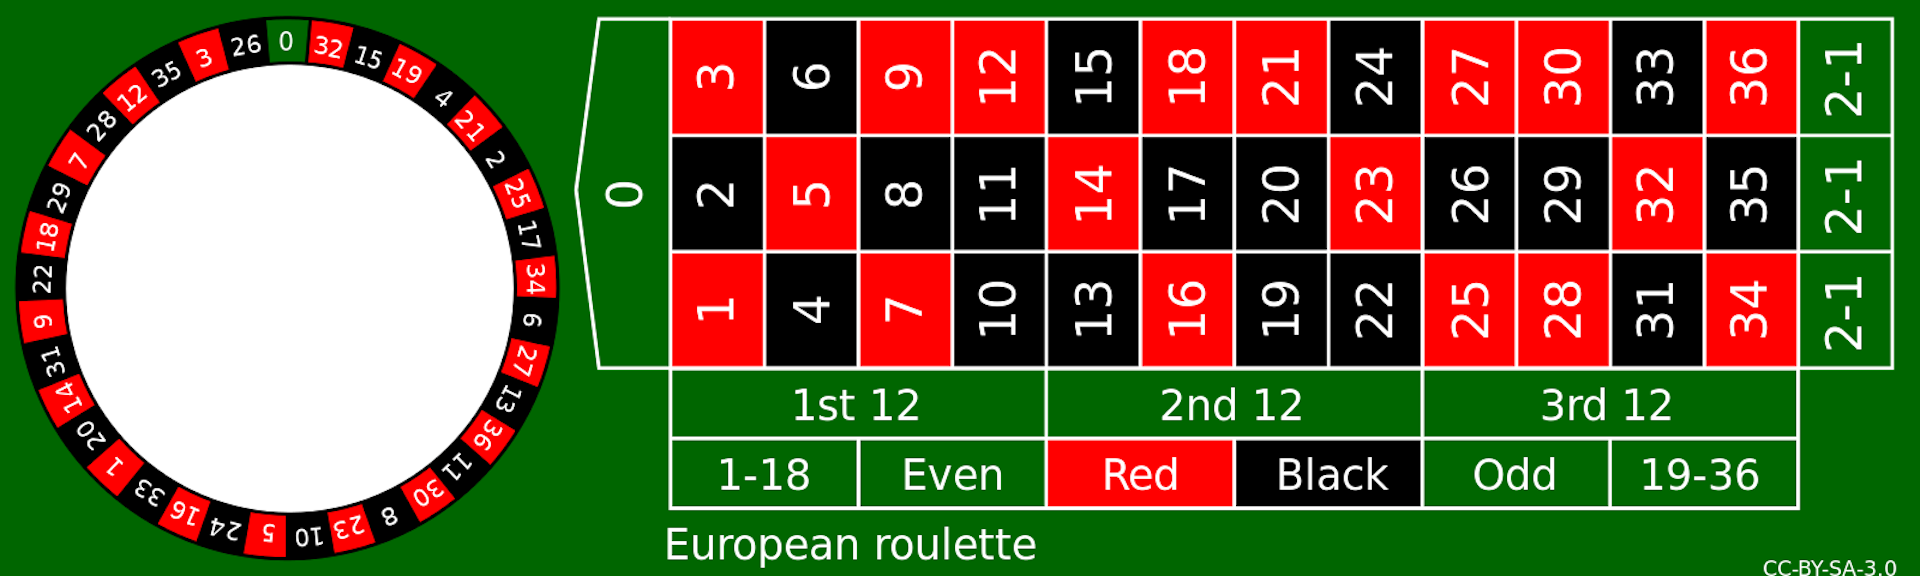 Roulette Chart